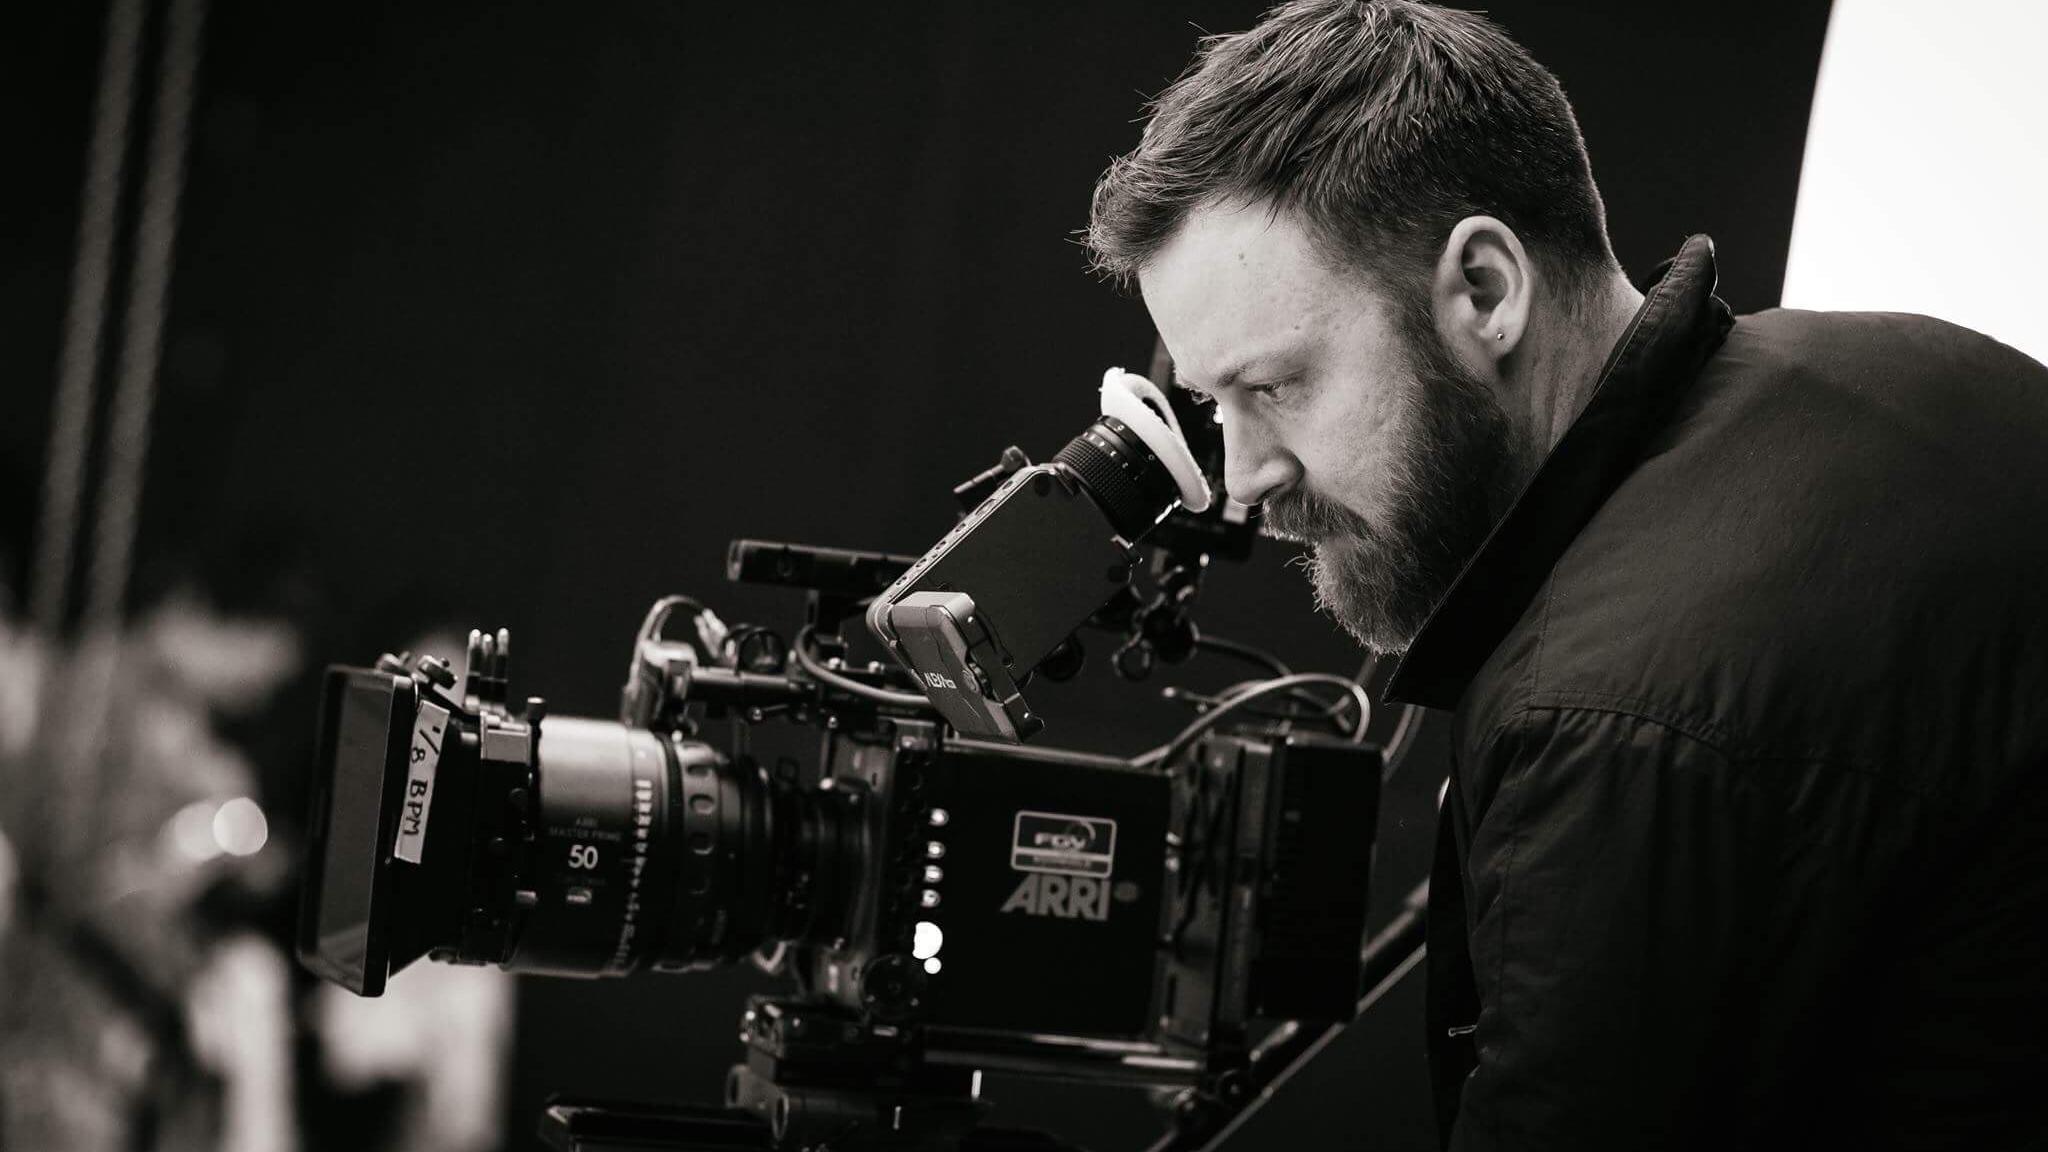 Cinematographer, Arthur Mulhern